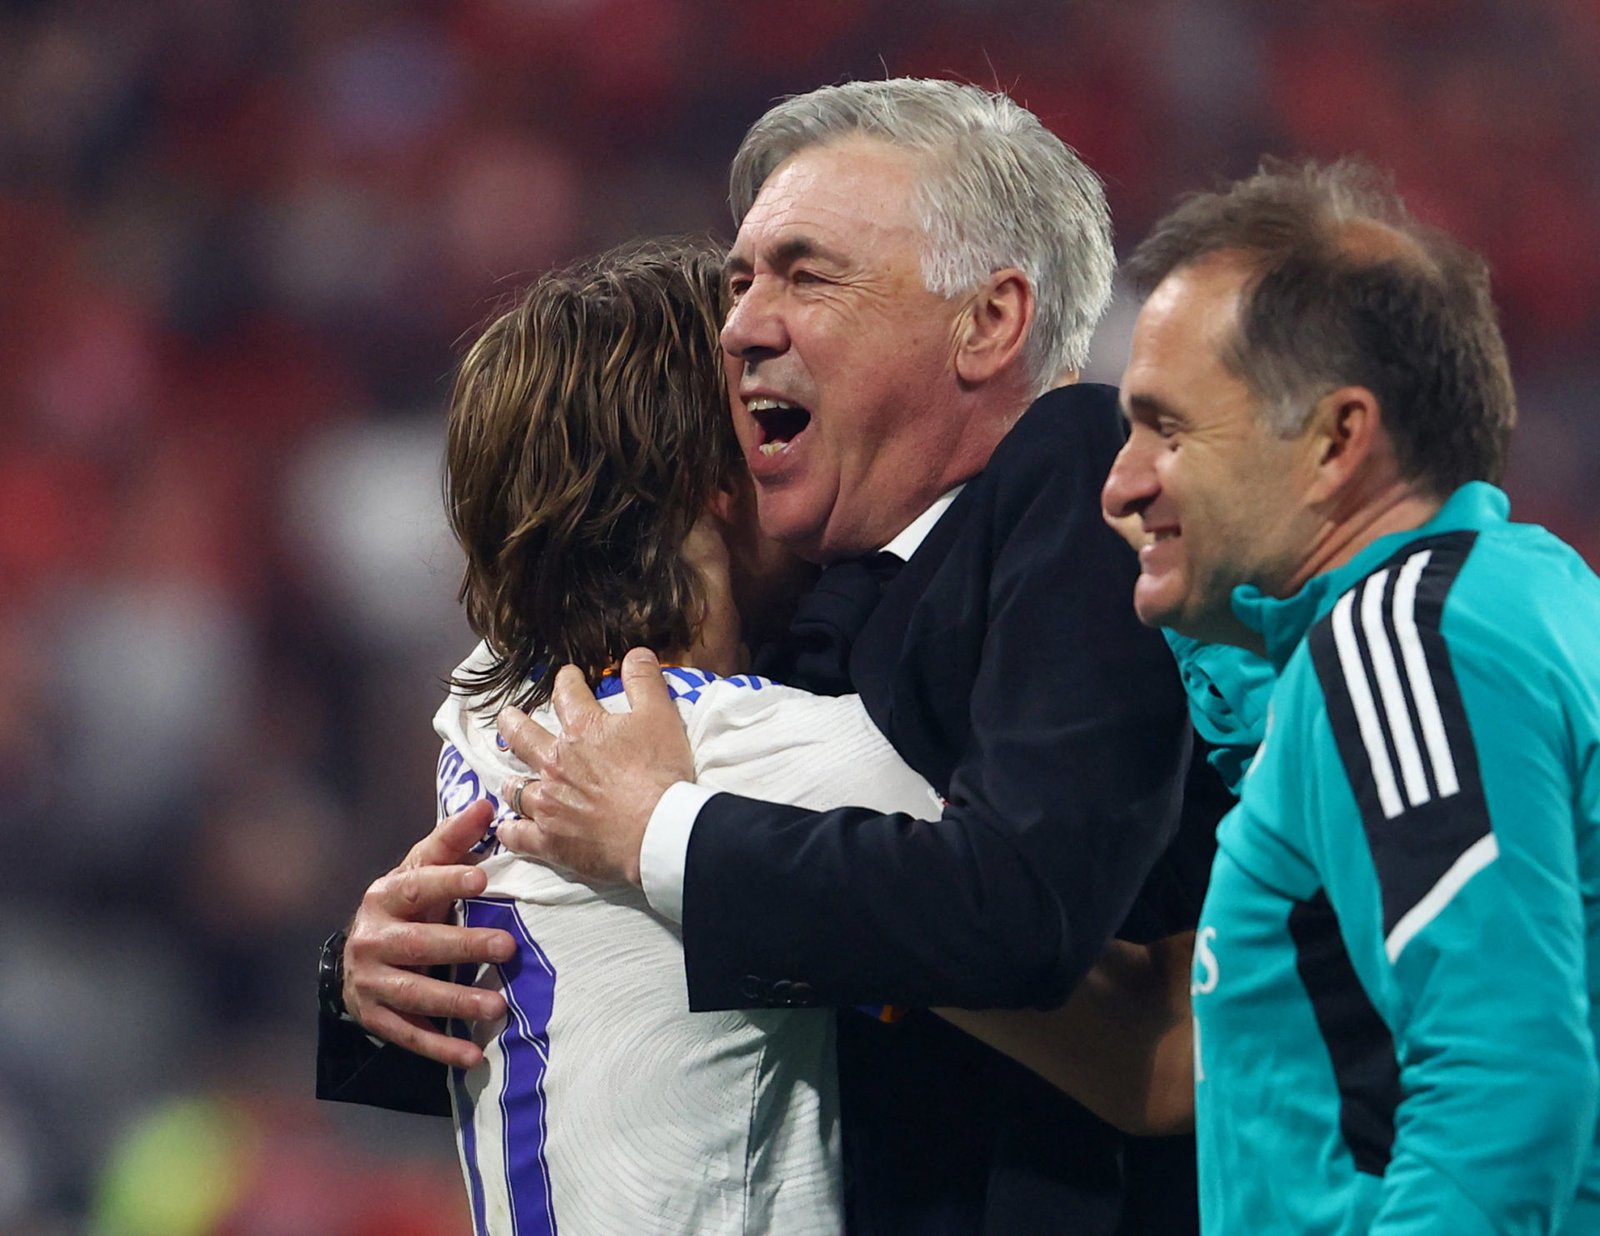 Real Madrid's Objective Explains the Reason Behind Ancelotti's Calm Demeanor